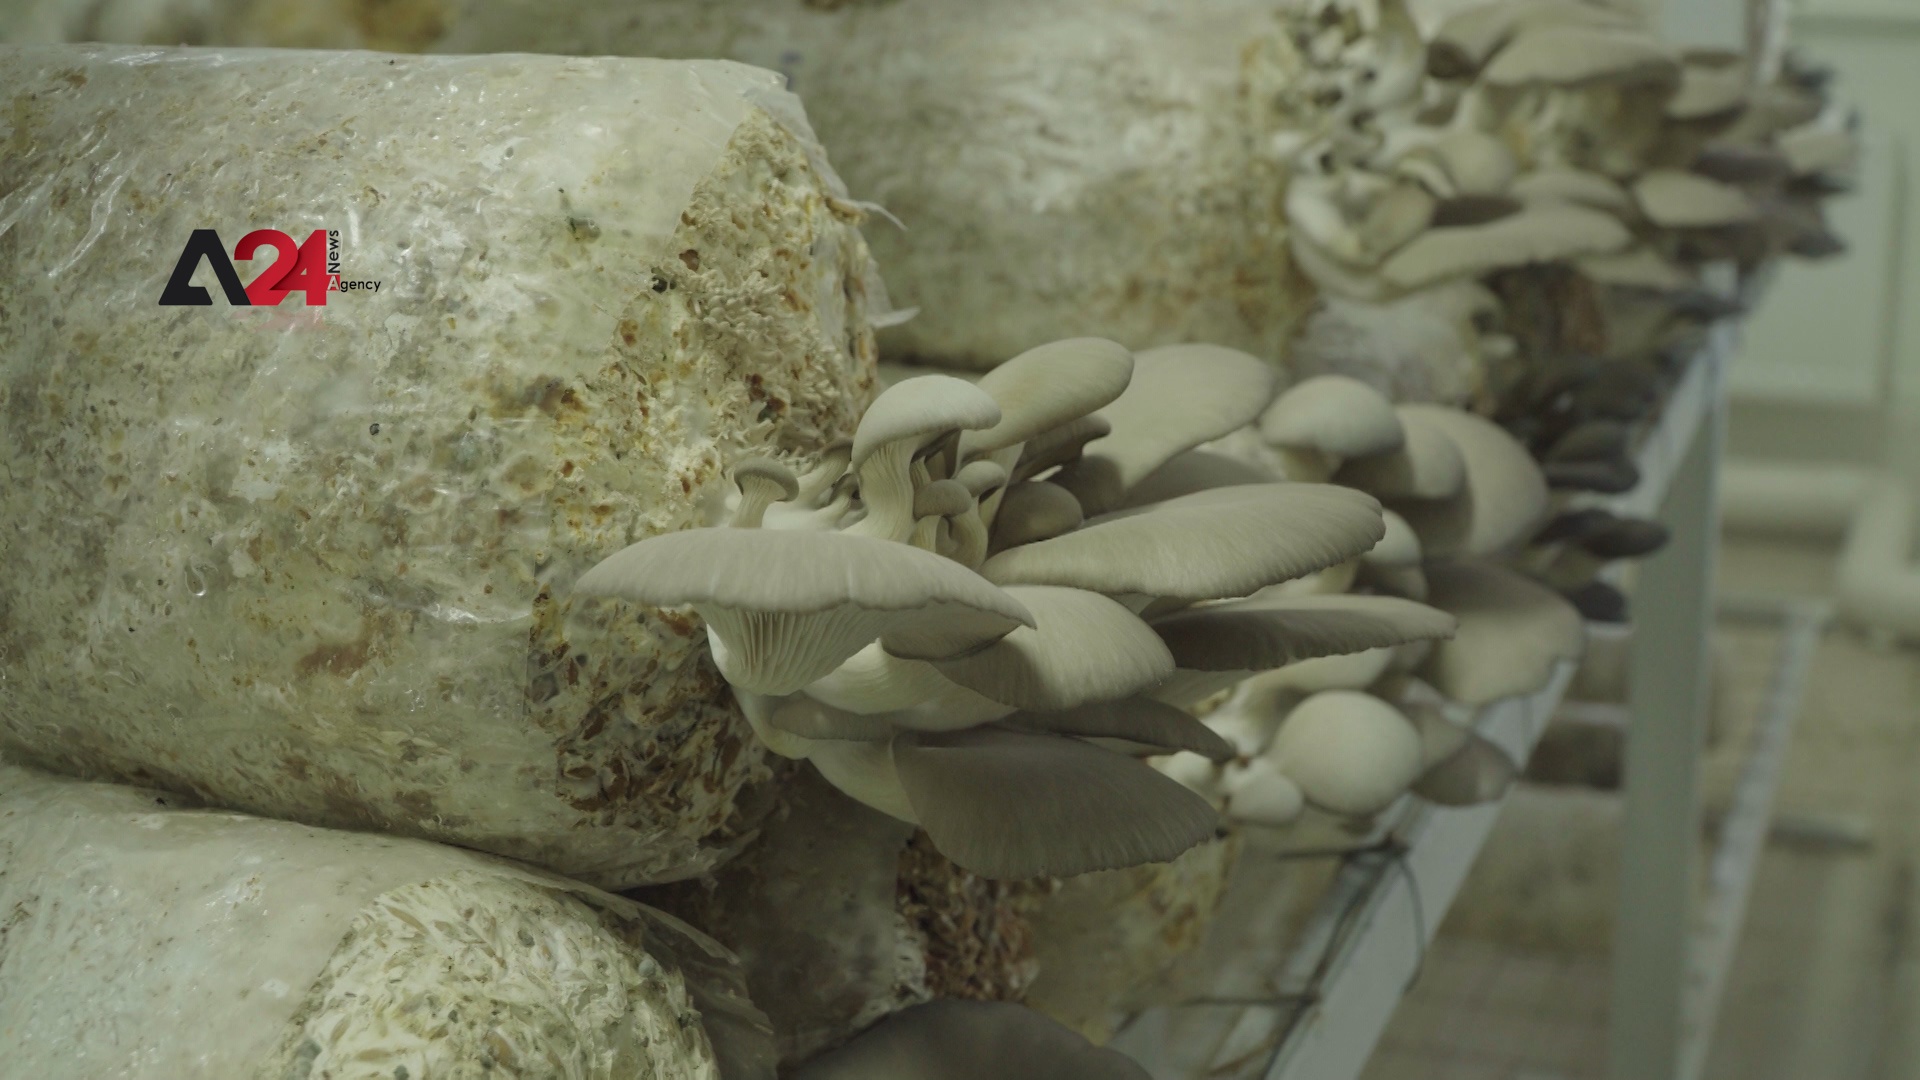 Mongolia - Medicinal mushrooms grown on sea buckthorn waste in Mongolia